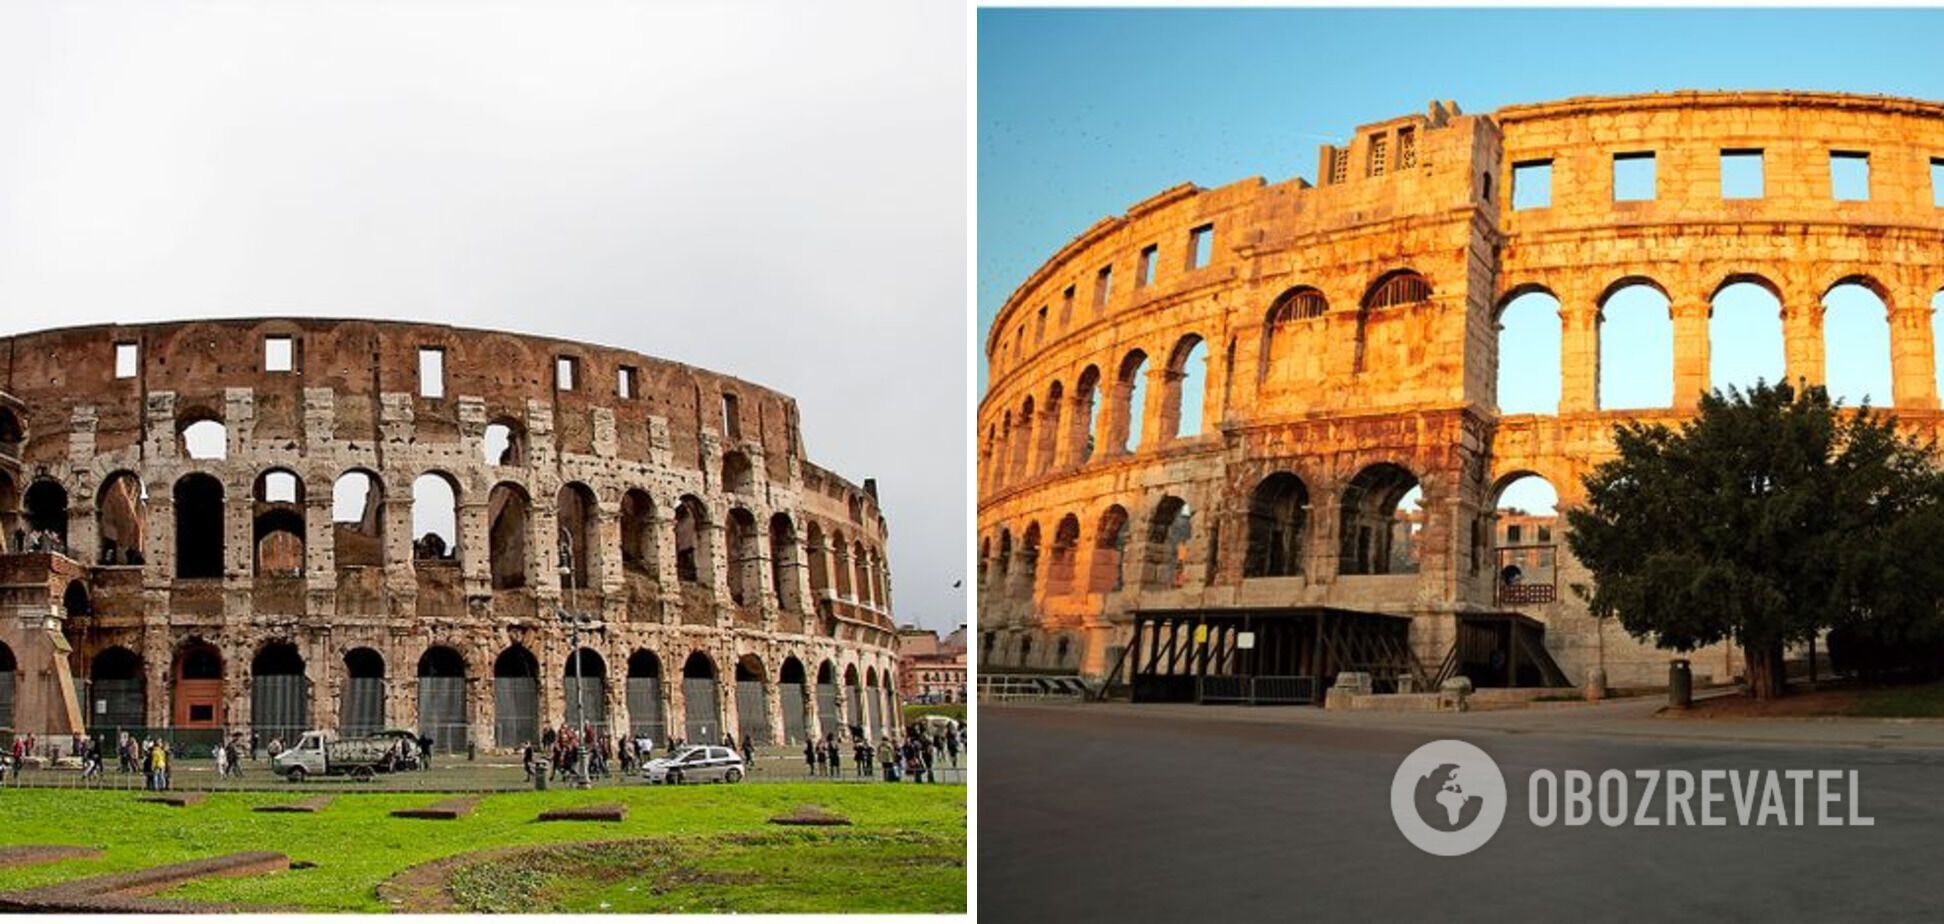 Слева – Колизей в Италии, справа – амфитеатр Пулы в Хорватии.